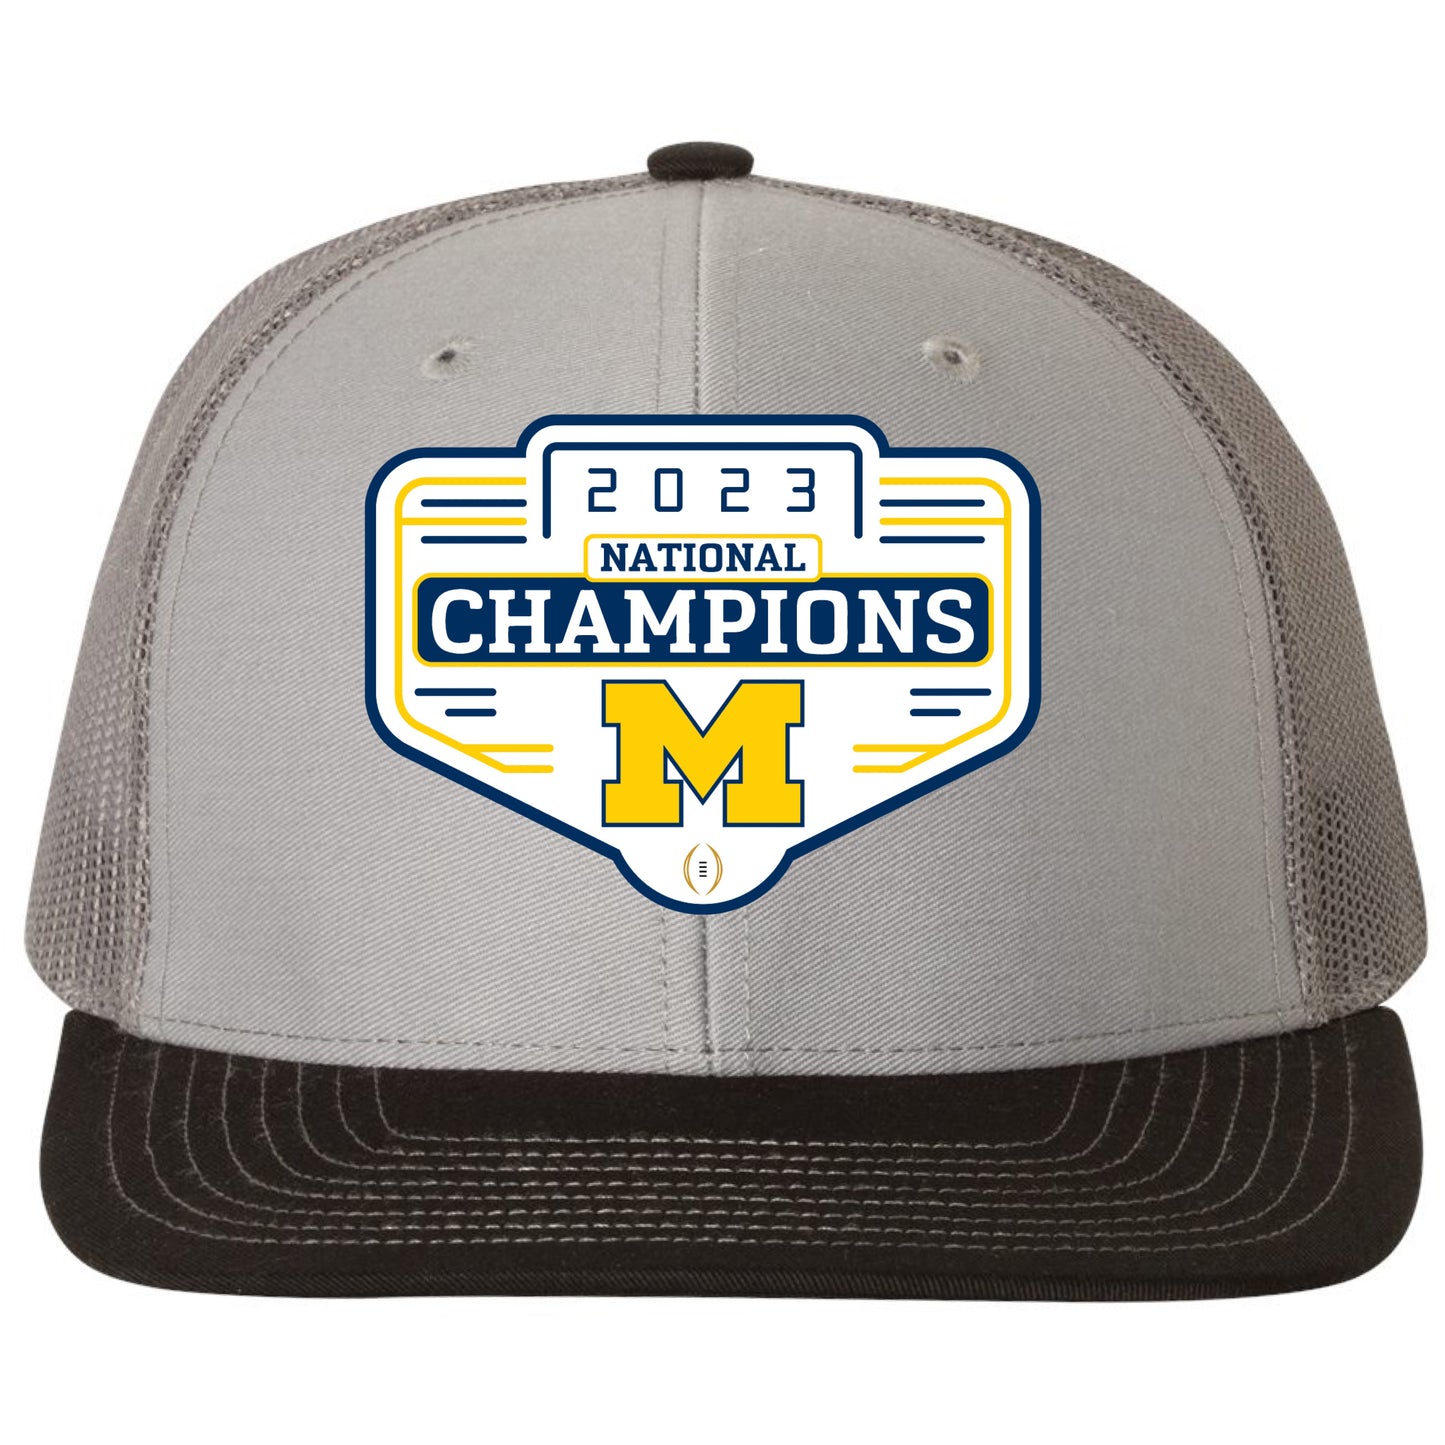 Michigan Wolverines 2023 National Champions 3D Snapback Trucker Hat- Grey/ Charcoal/ Black - Ten Gallon Hat Co.